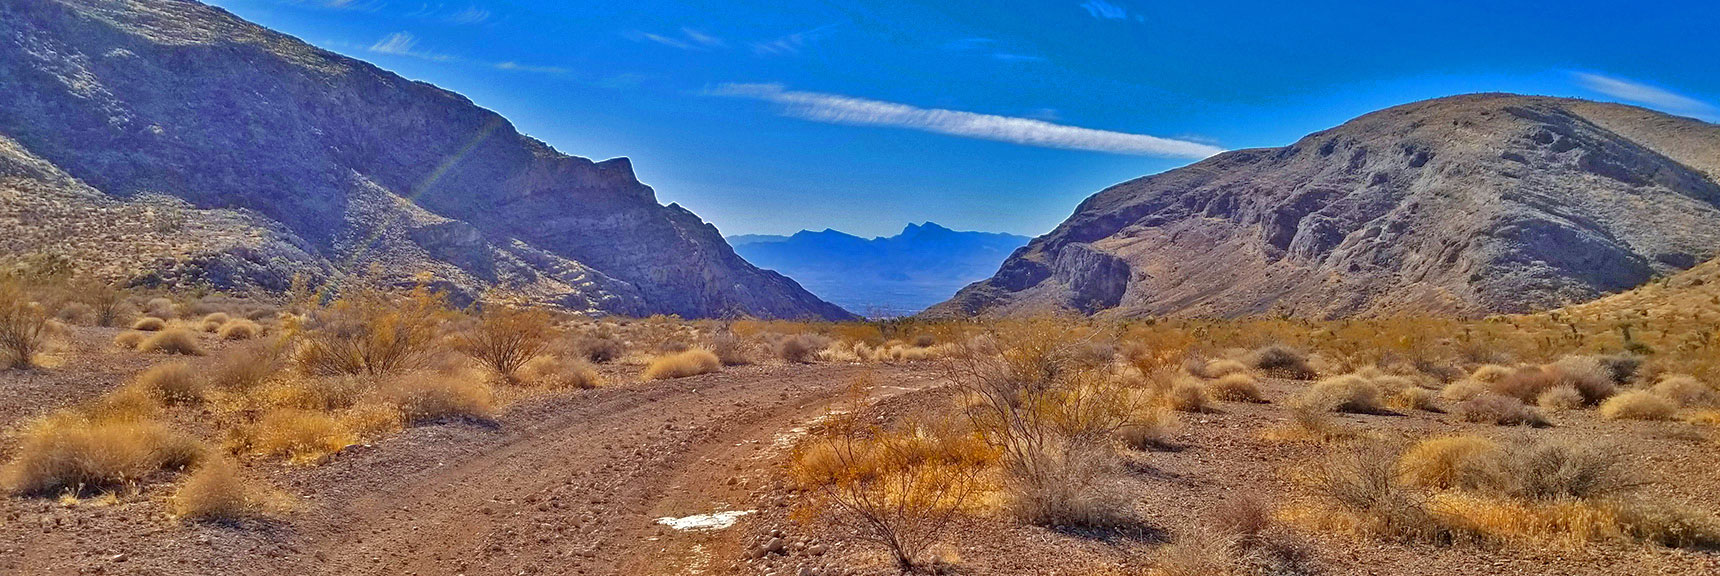 Gass Peak Road Circuit | Gass Peak | Desert National Wildlife Refuge, Nevada